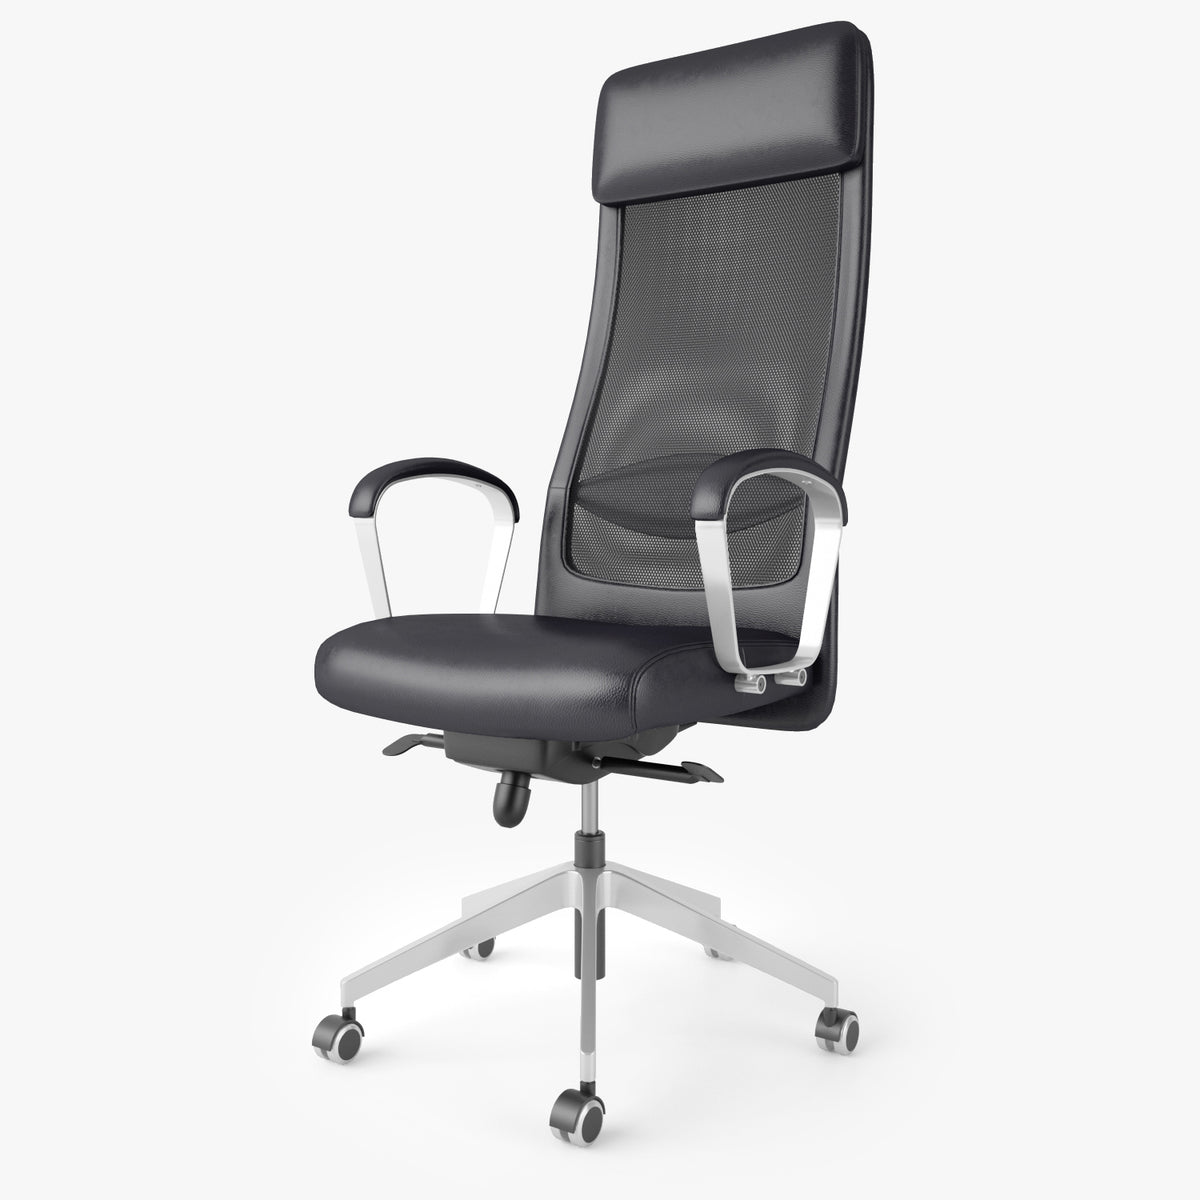 IKEA Markus Office Chair 3D Model | FaceQuad